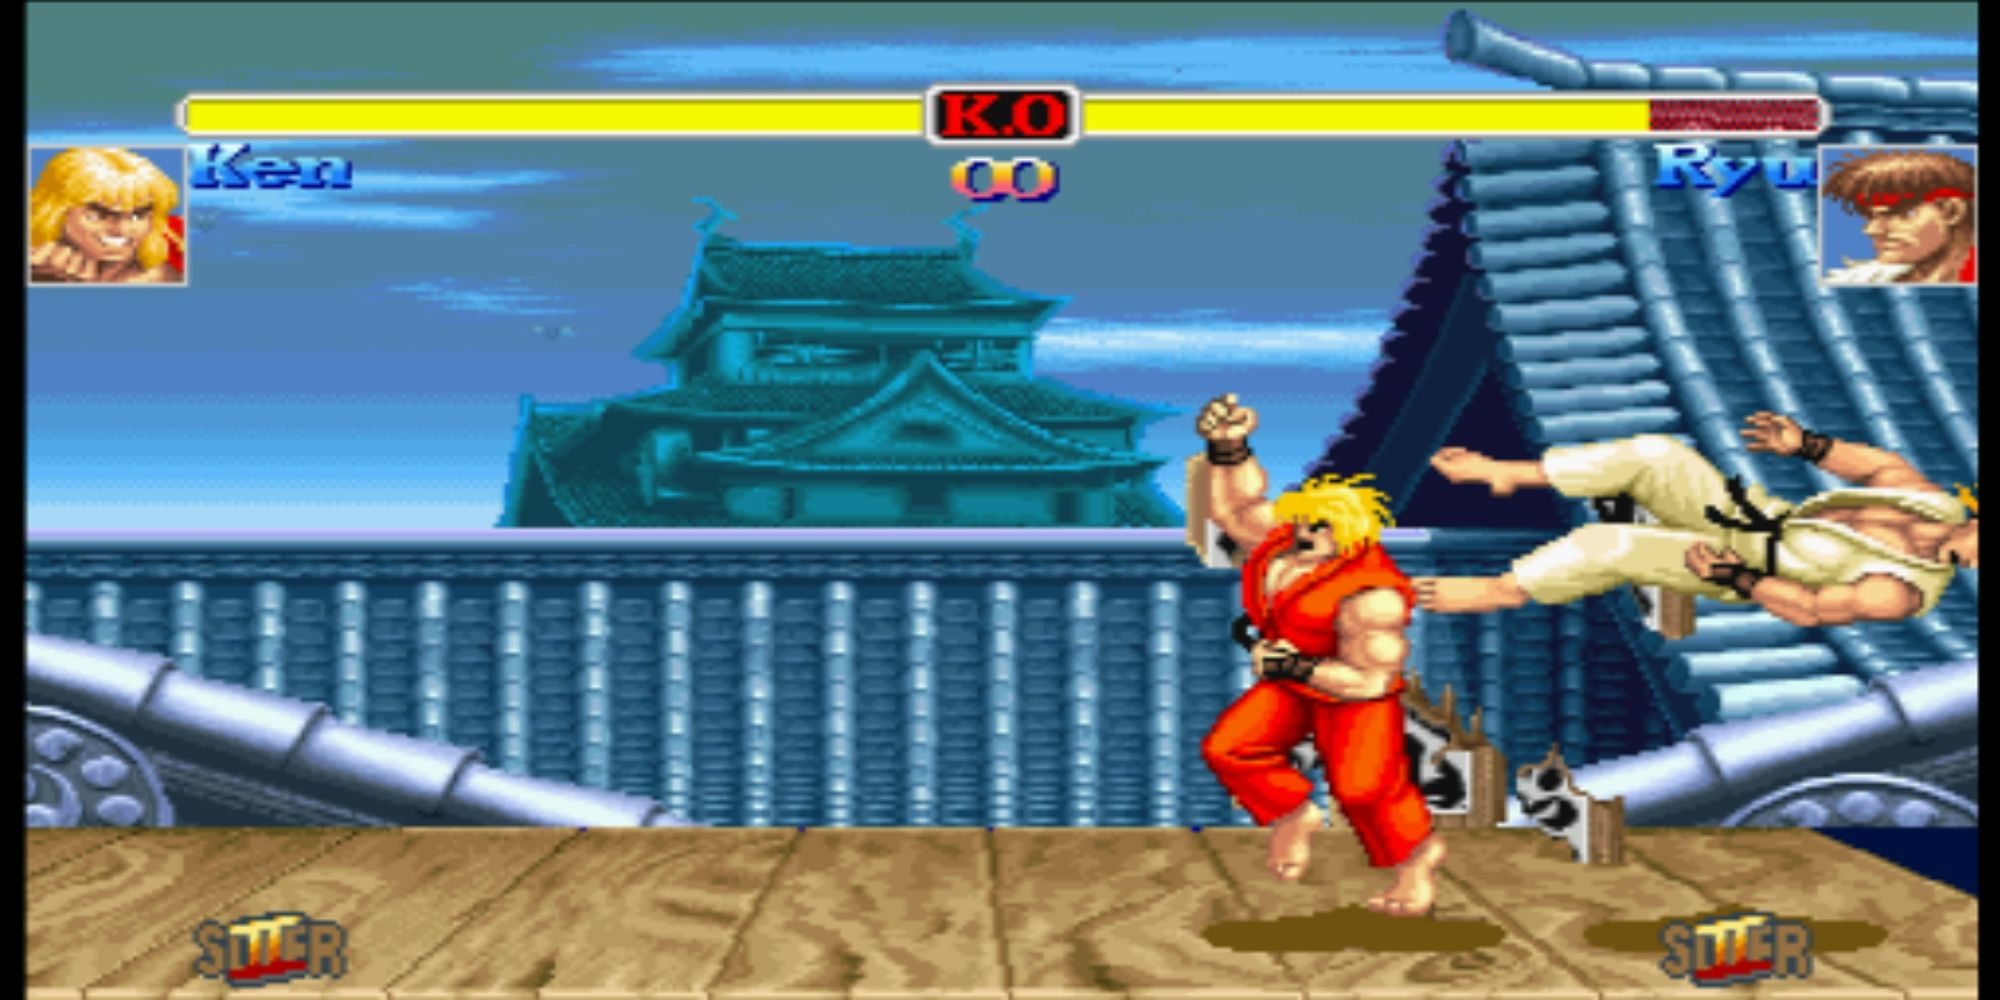 Super SF2 Ken hits Ryu with a Shoryuken at Suzaku Castle in Hyper Street Fighter 2.